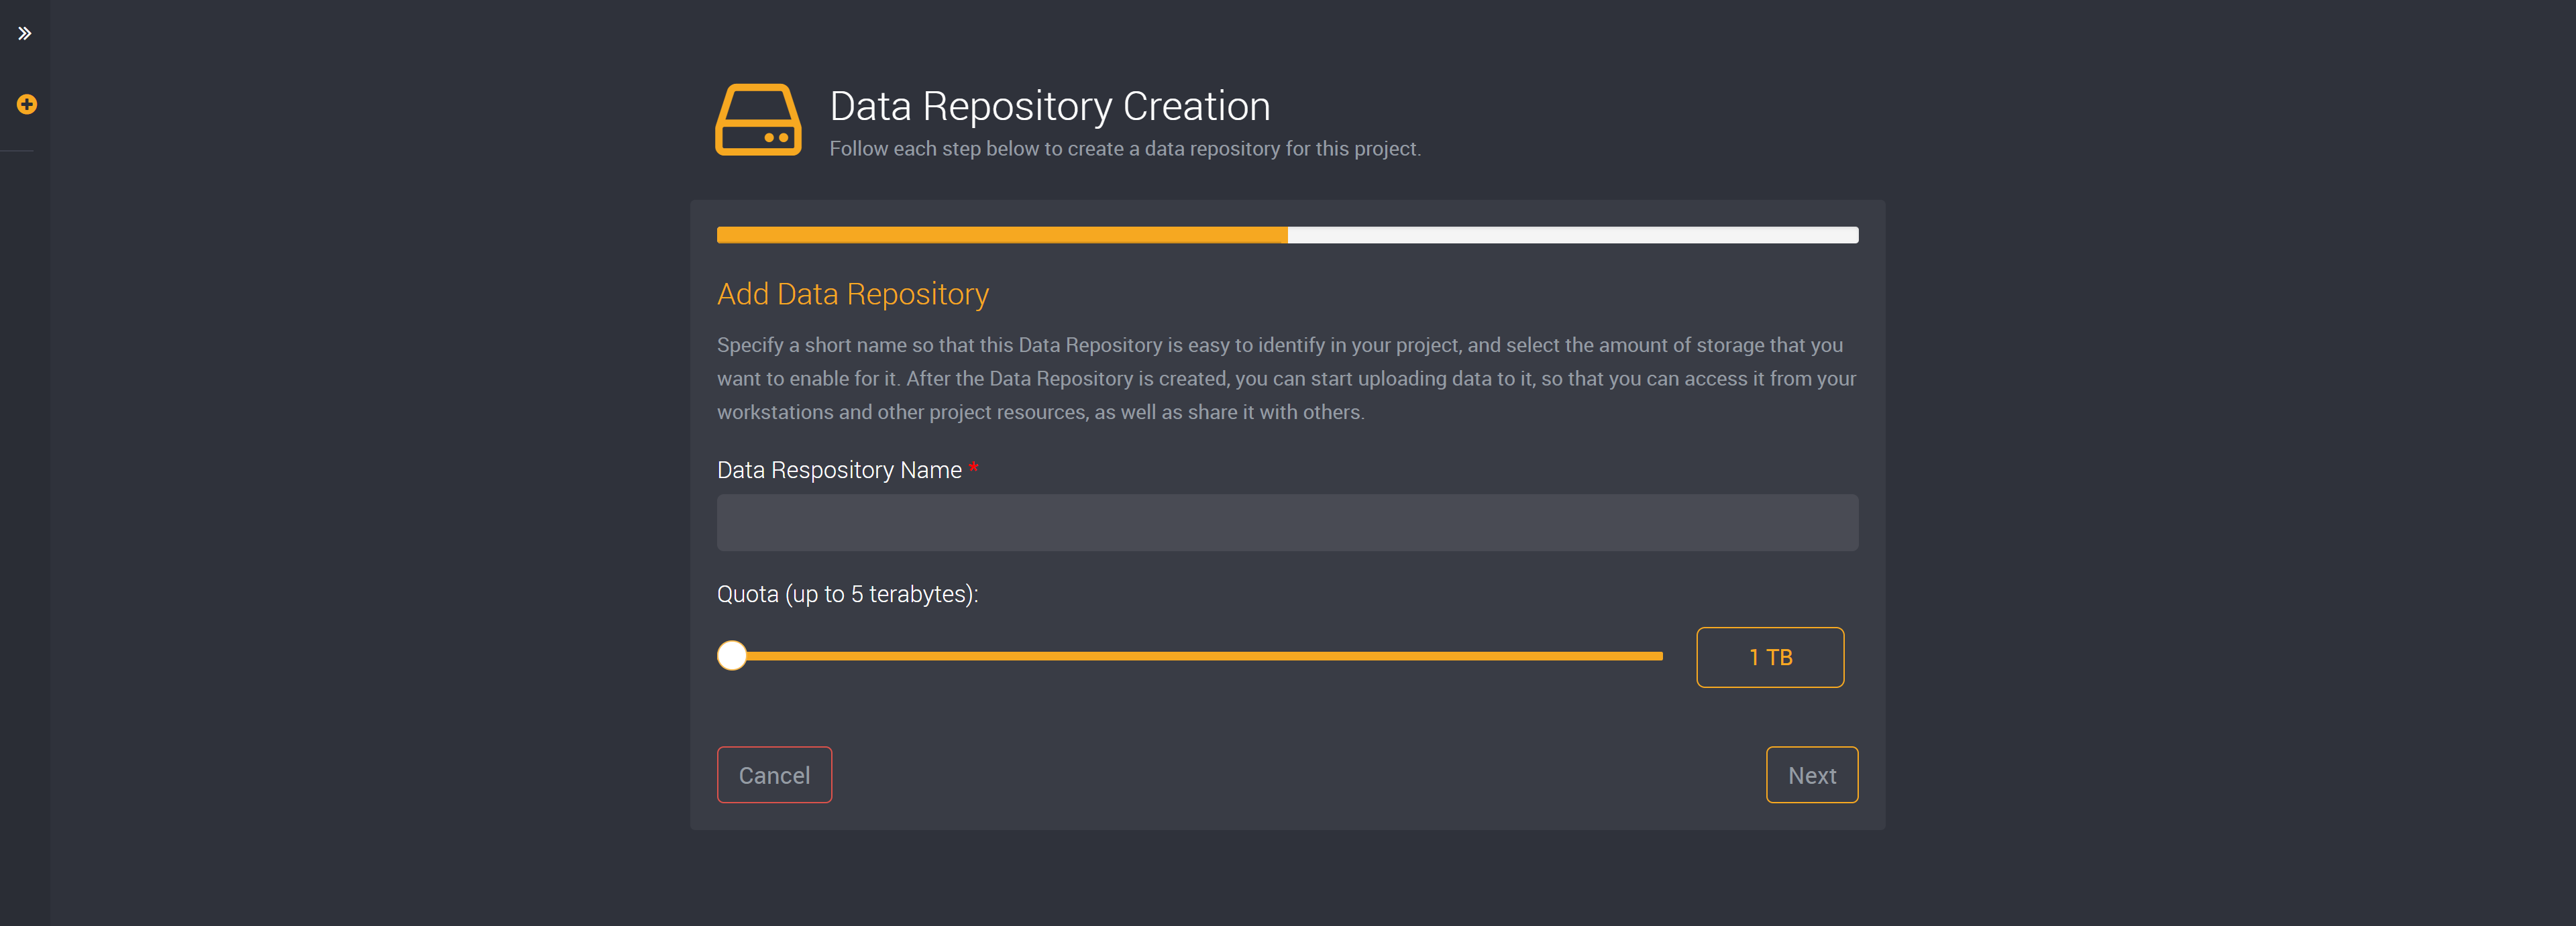 Name data repository